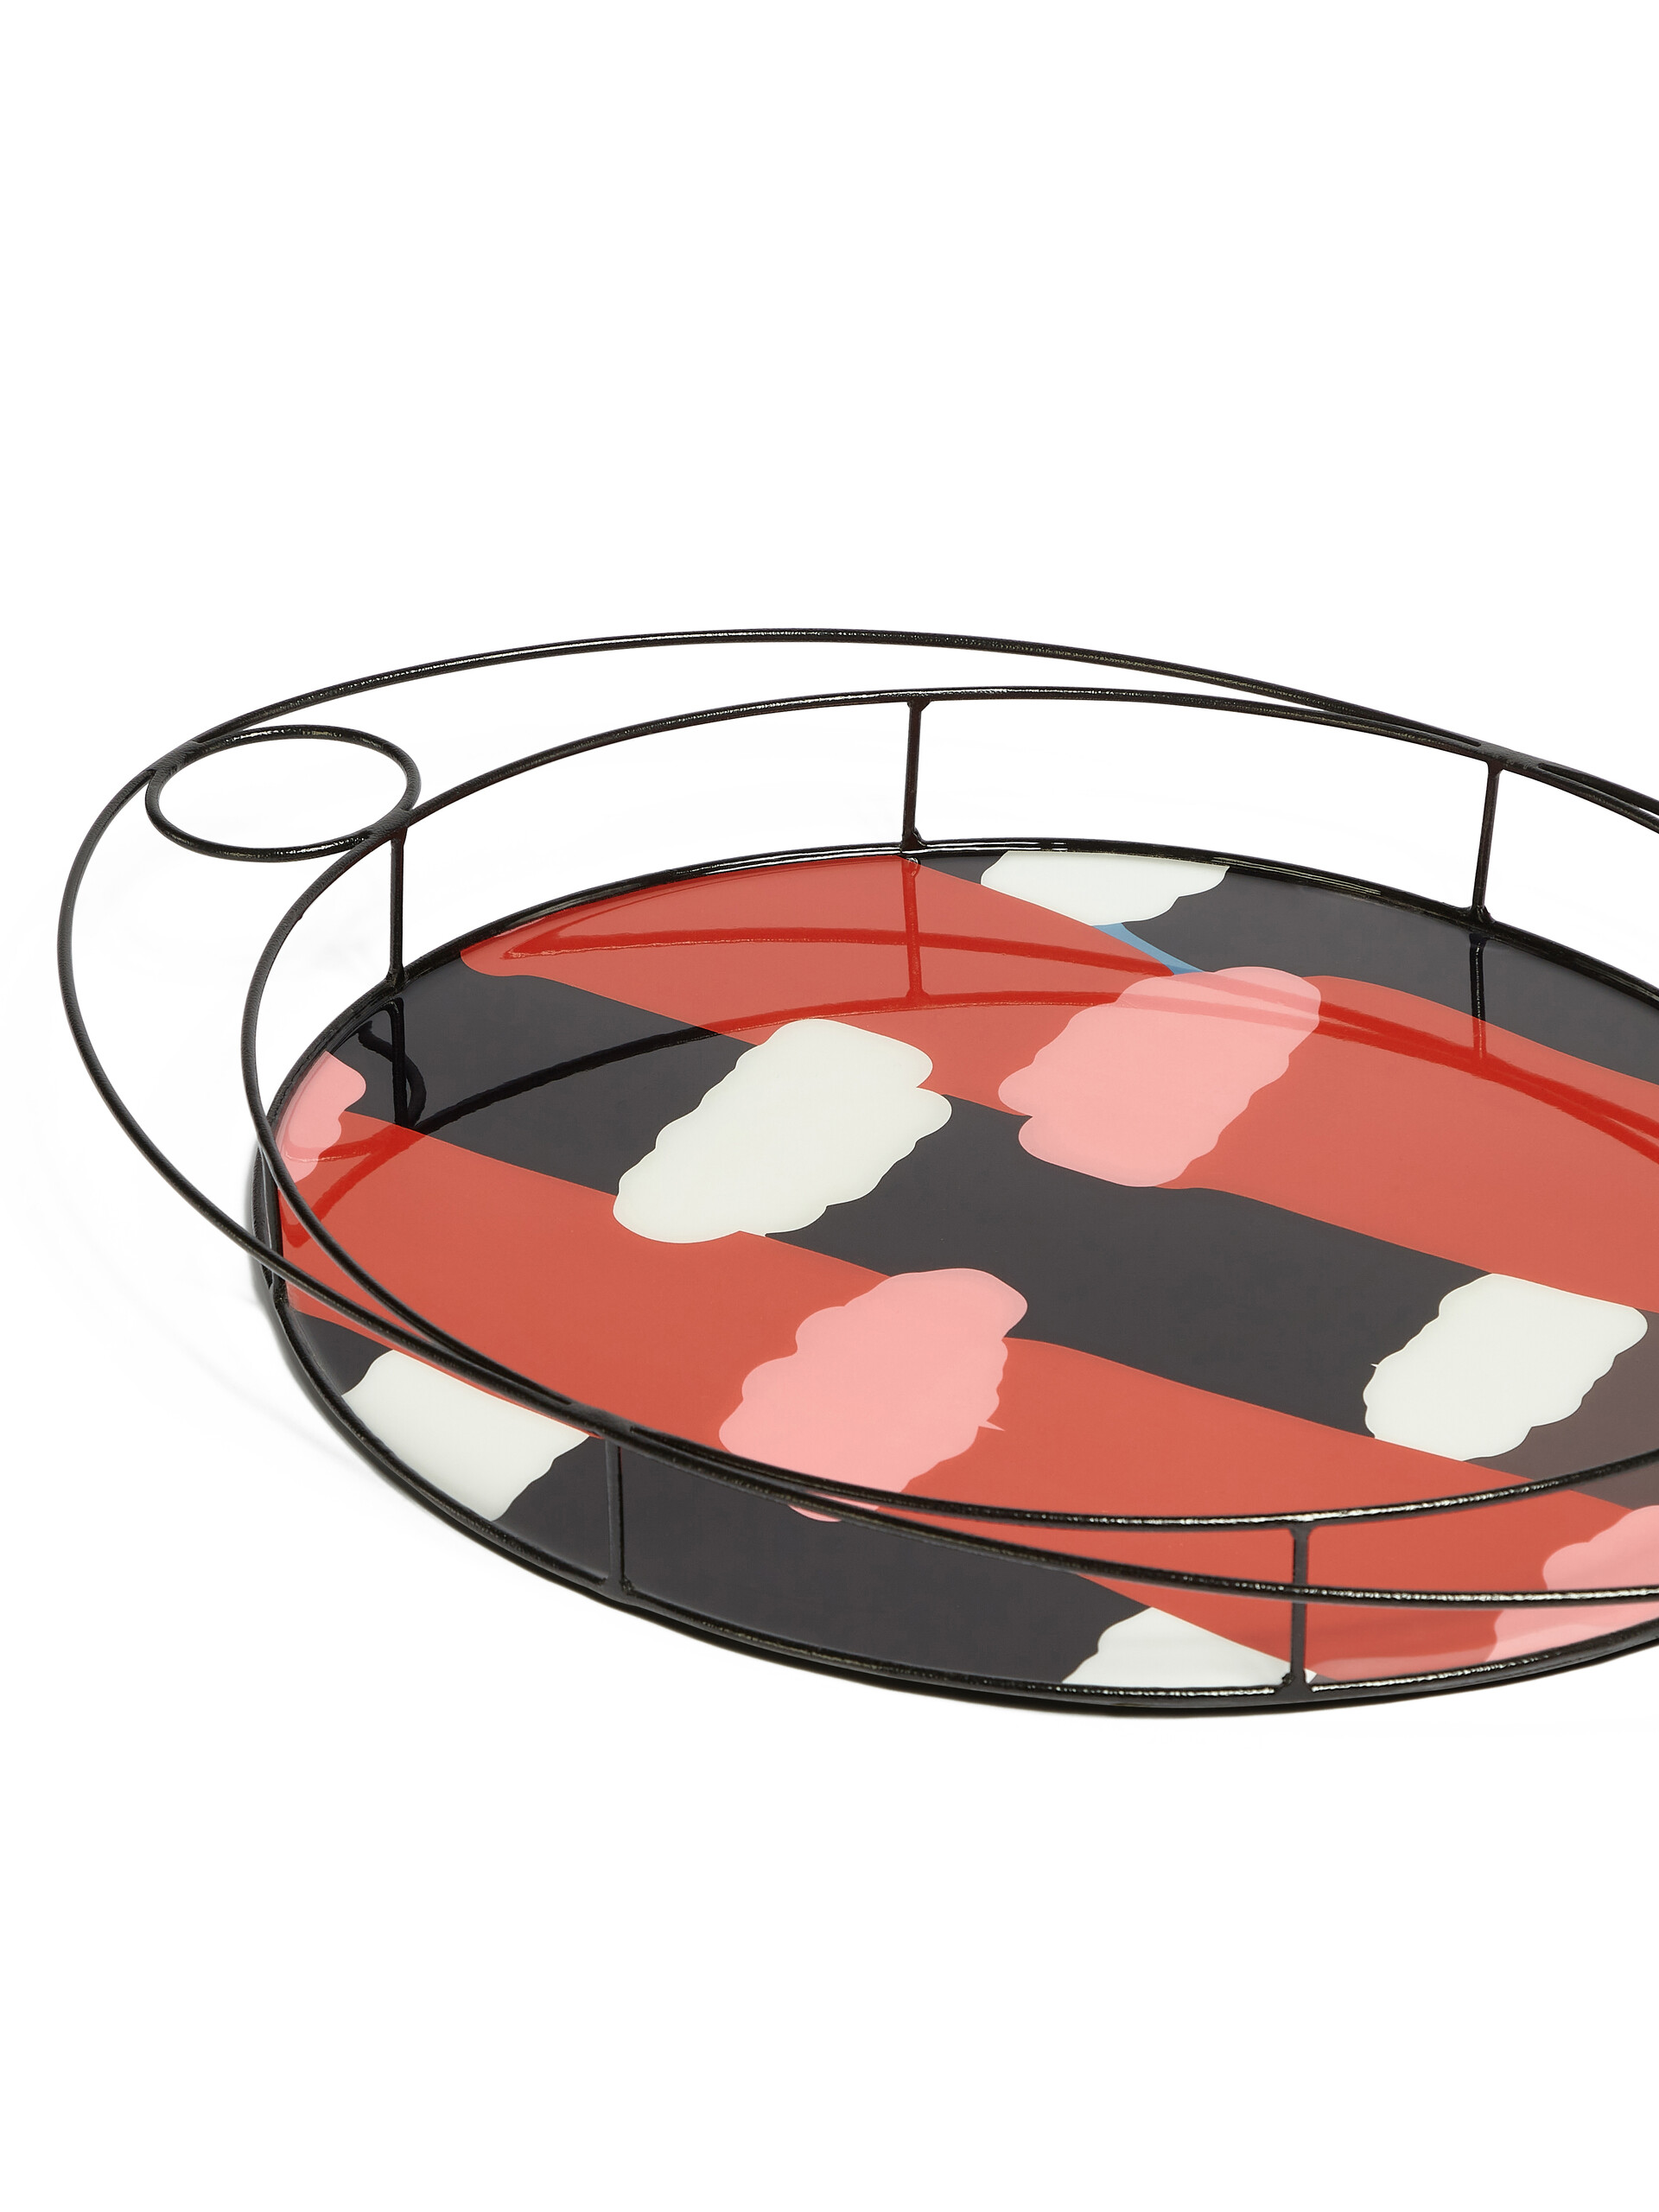 MARNI MARKET oval tray in iron colourblock resin - Accessories - Image 3